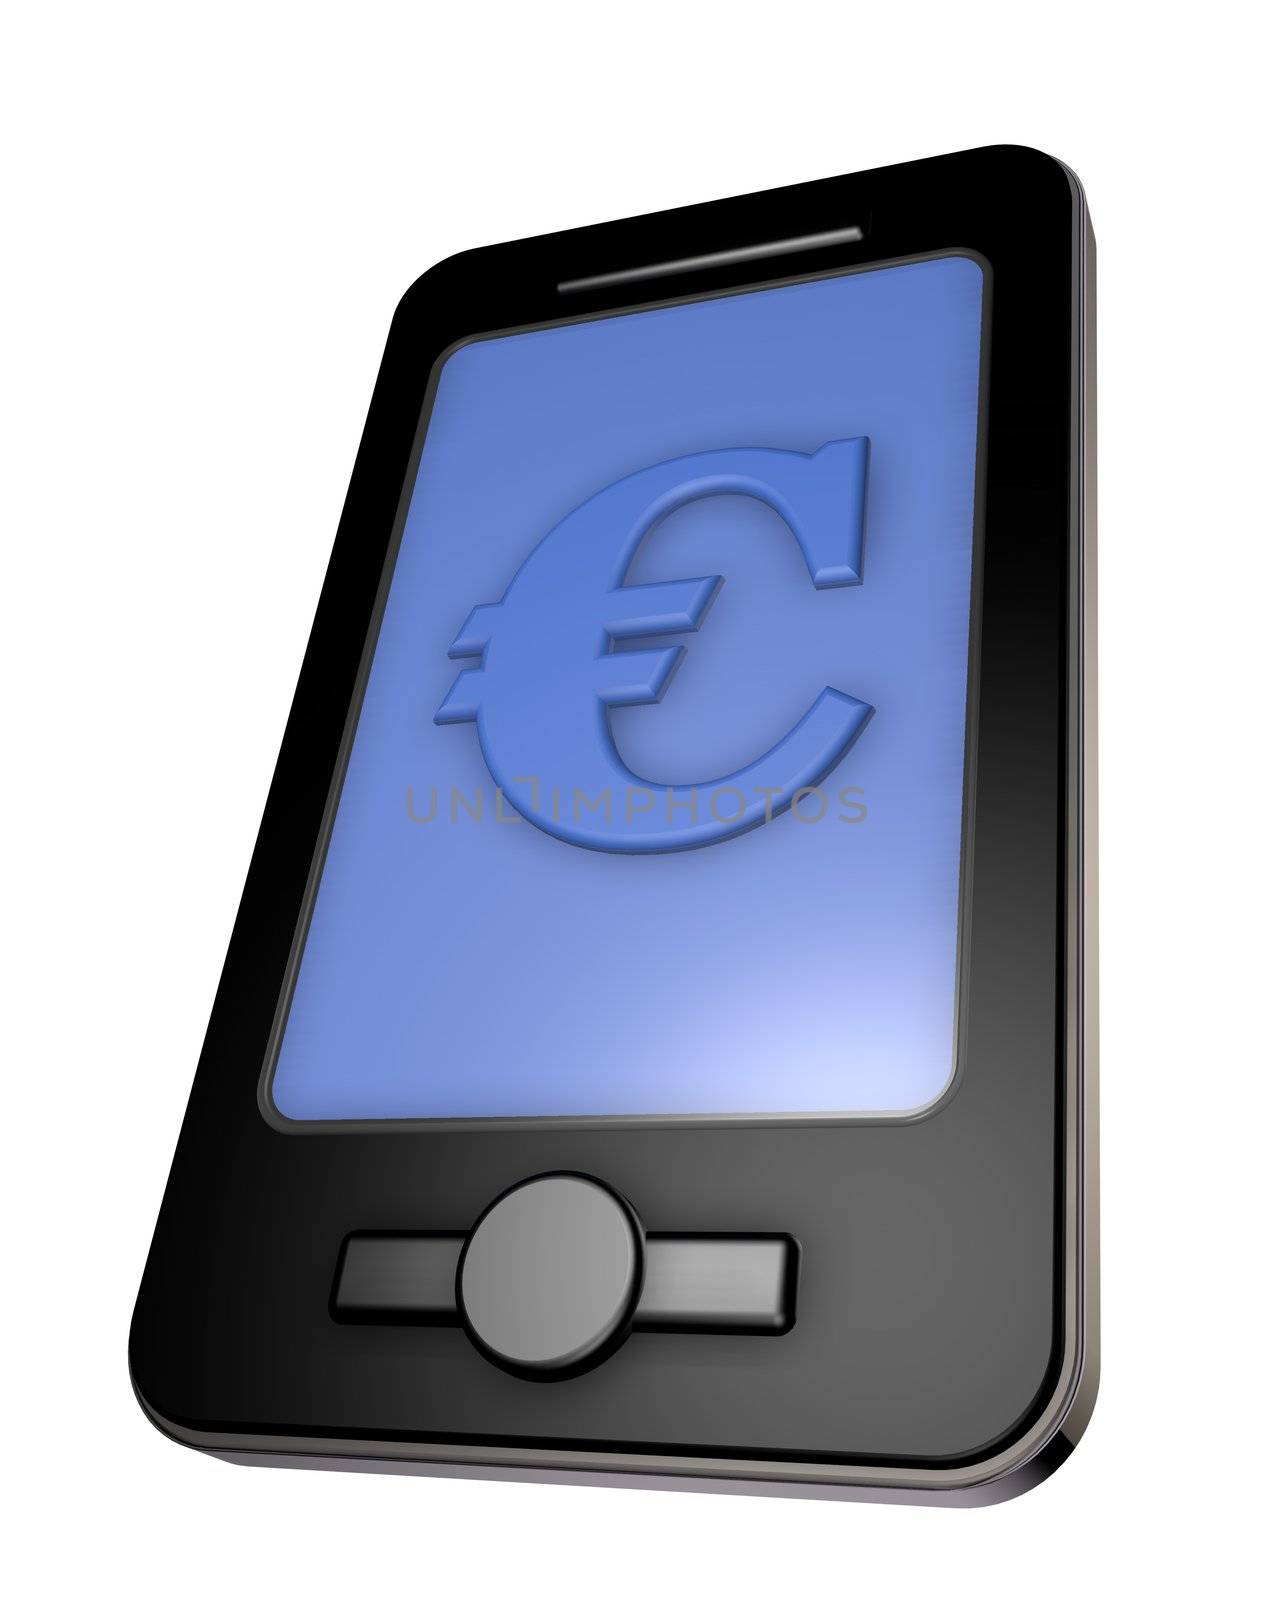 smartphone with euro symbol - 3d illustration